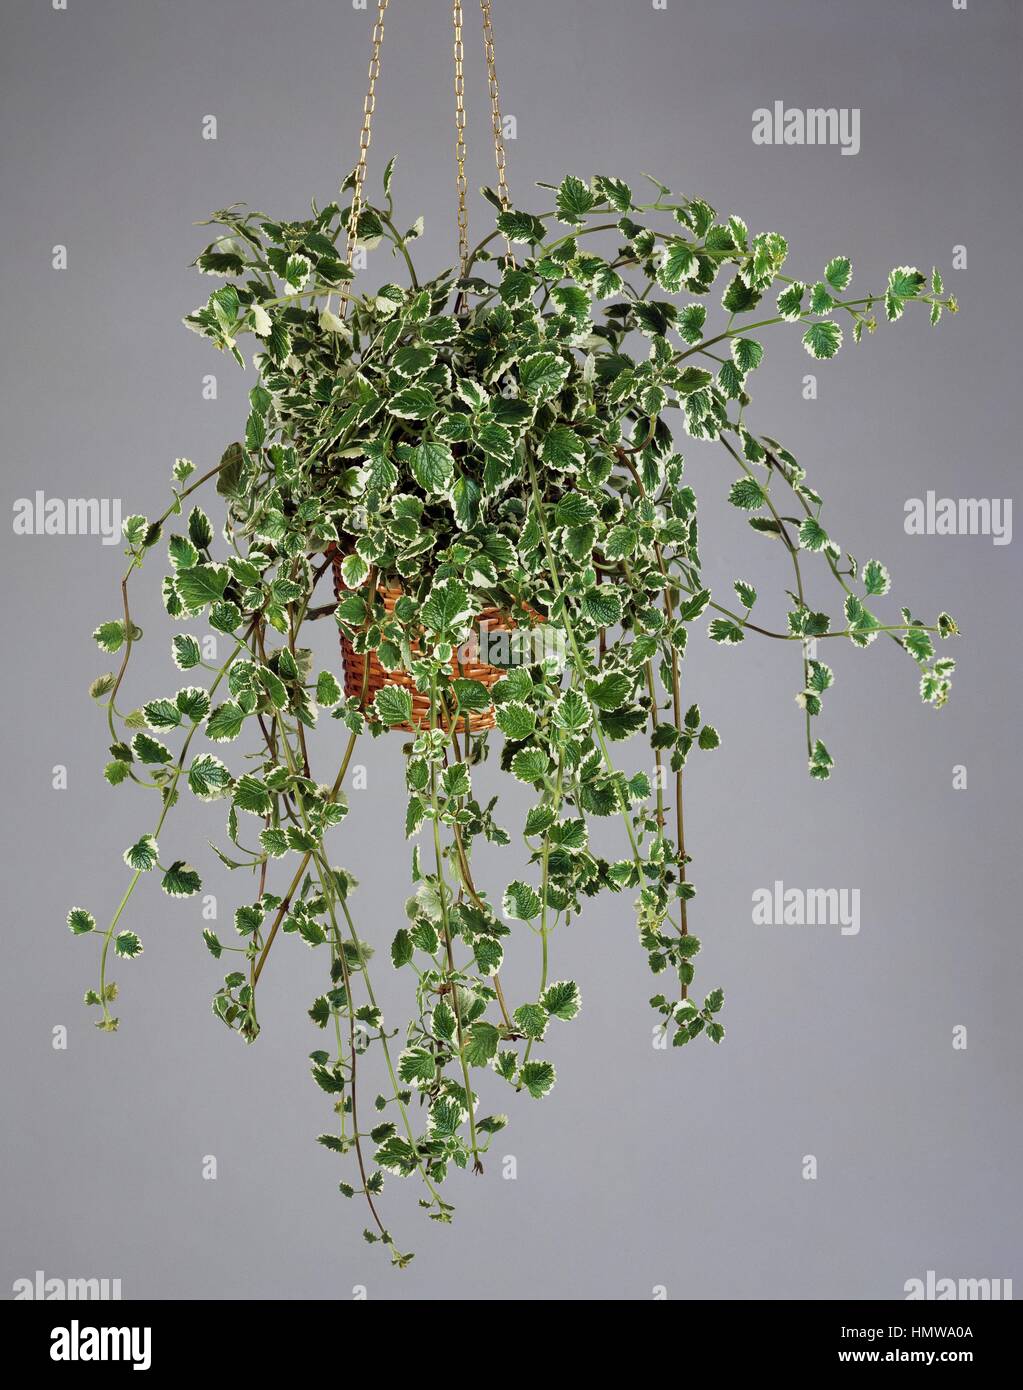 Variegated Mintleaf (Plectranthus madagascariensis), Lamiaceae. Stock Photo